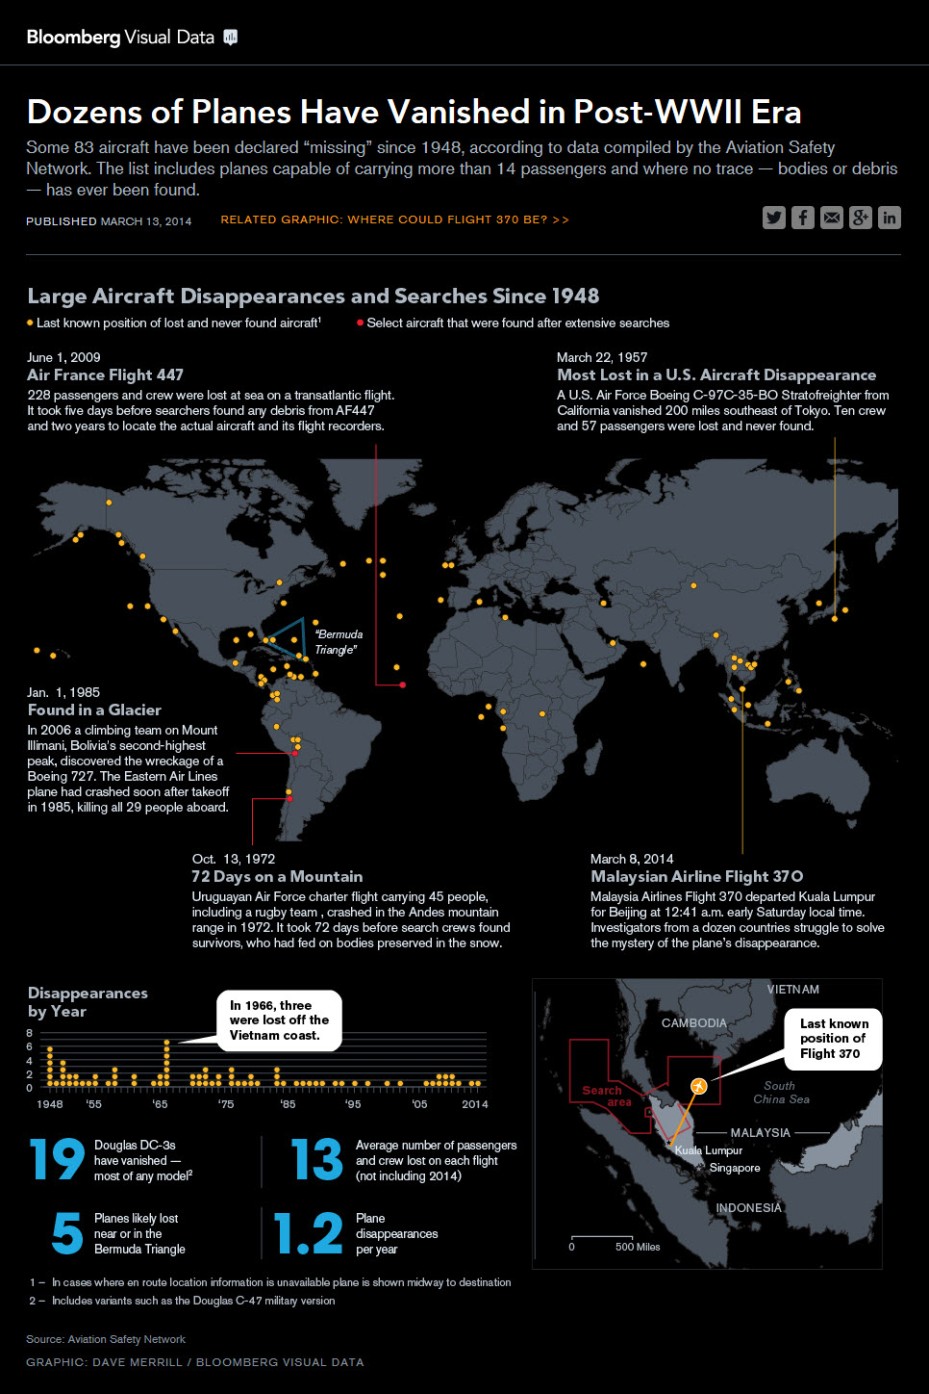 Dozens of Planes Have Vanished Infographic